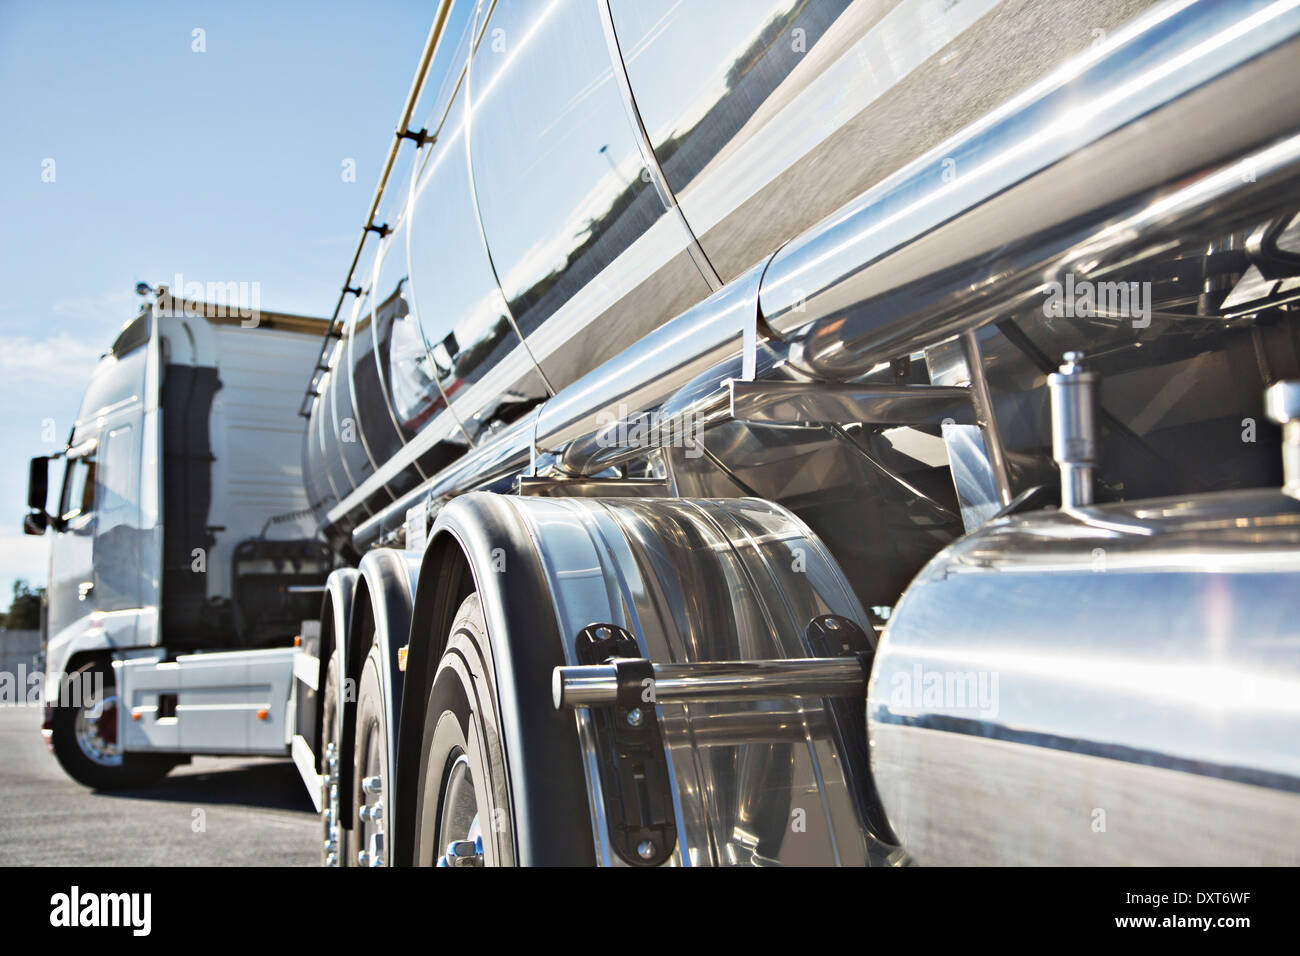 Stainless steel milk tanker Stock Photo